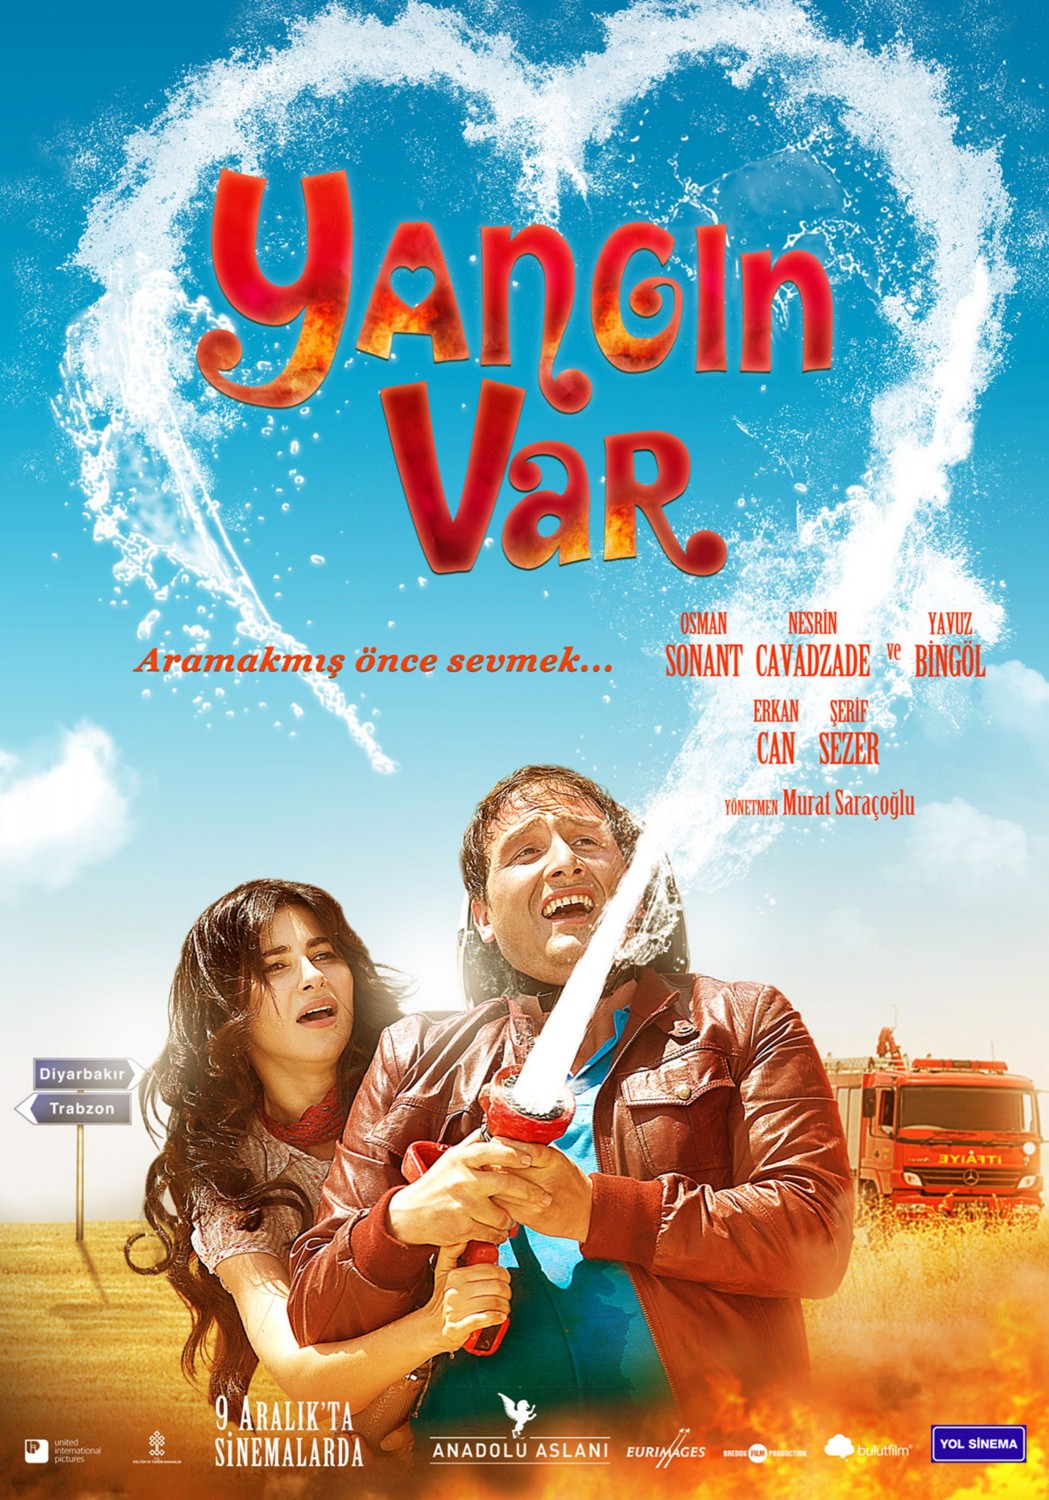 Extra Large Movie Poster Image for Yangin var 